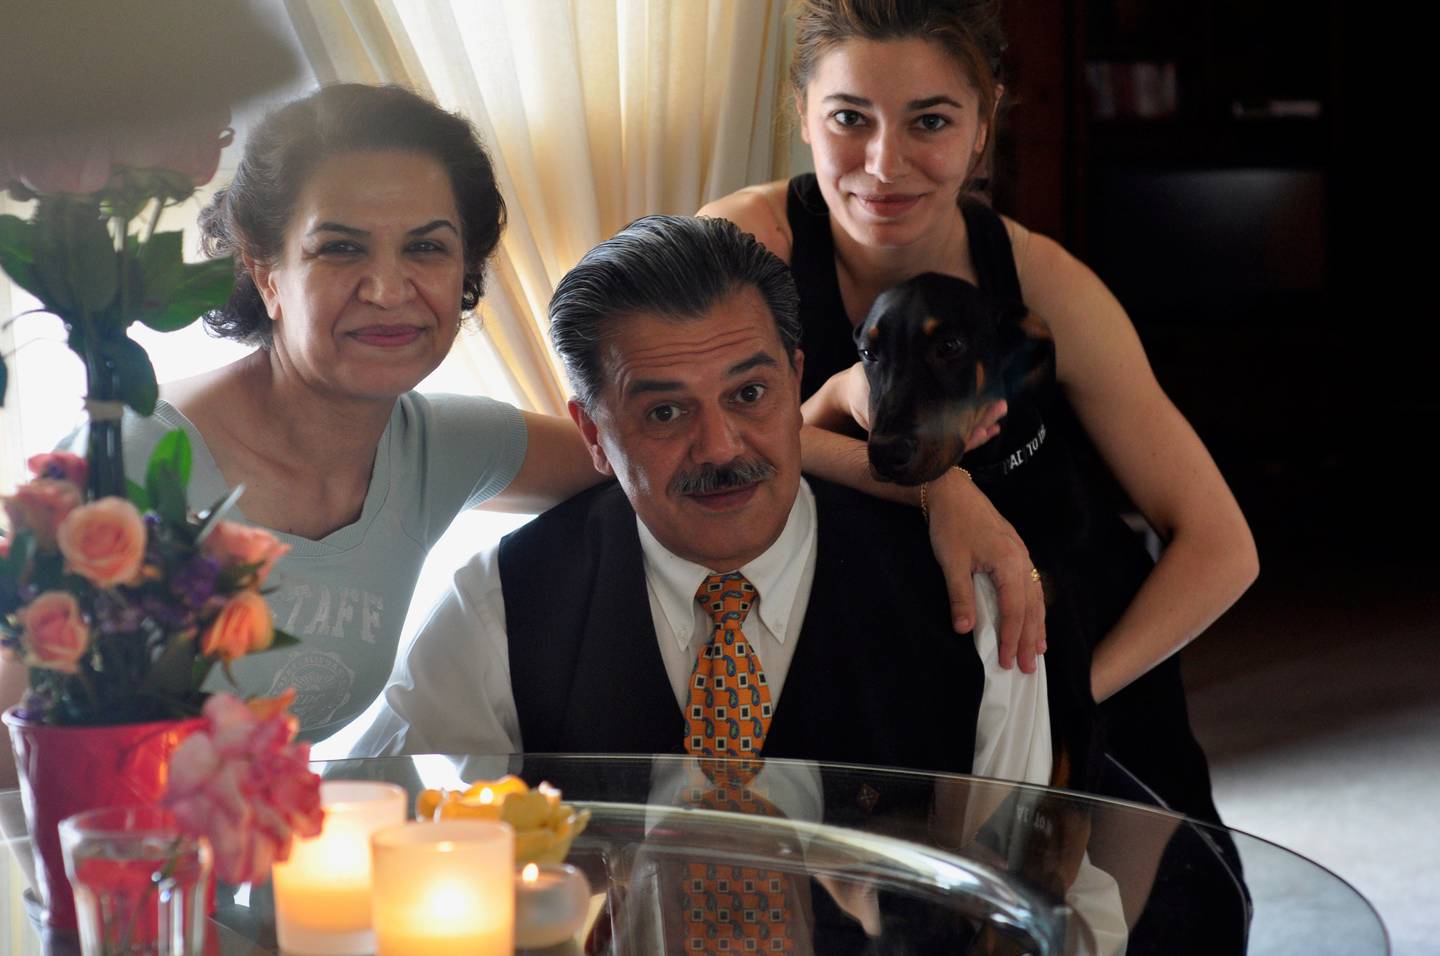 Jamshid Sharmahd with his wife Mehrnoush and daughter Gazelle. Photo: Gazelle Sharmahd